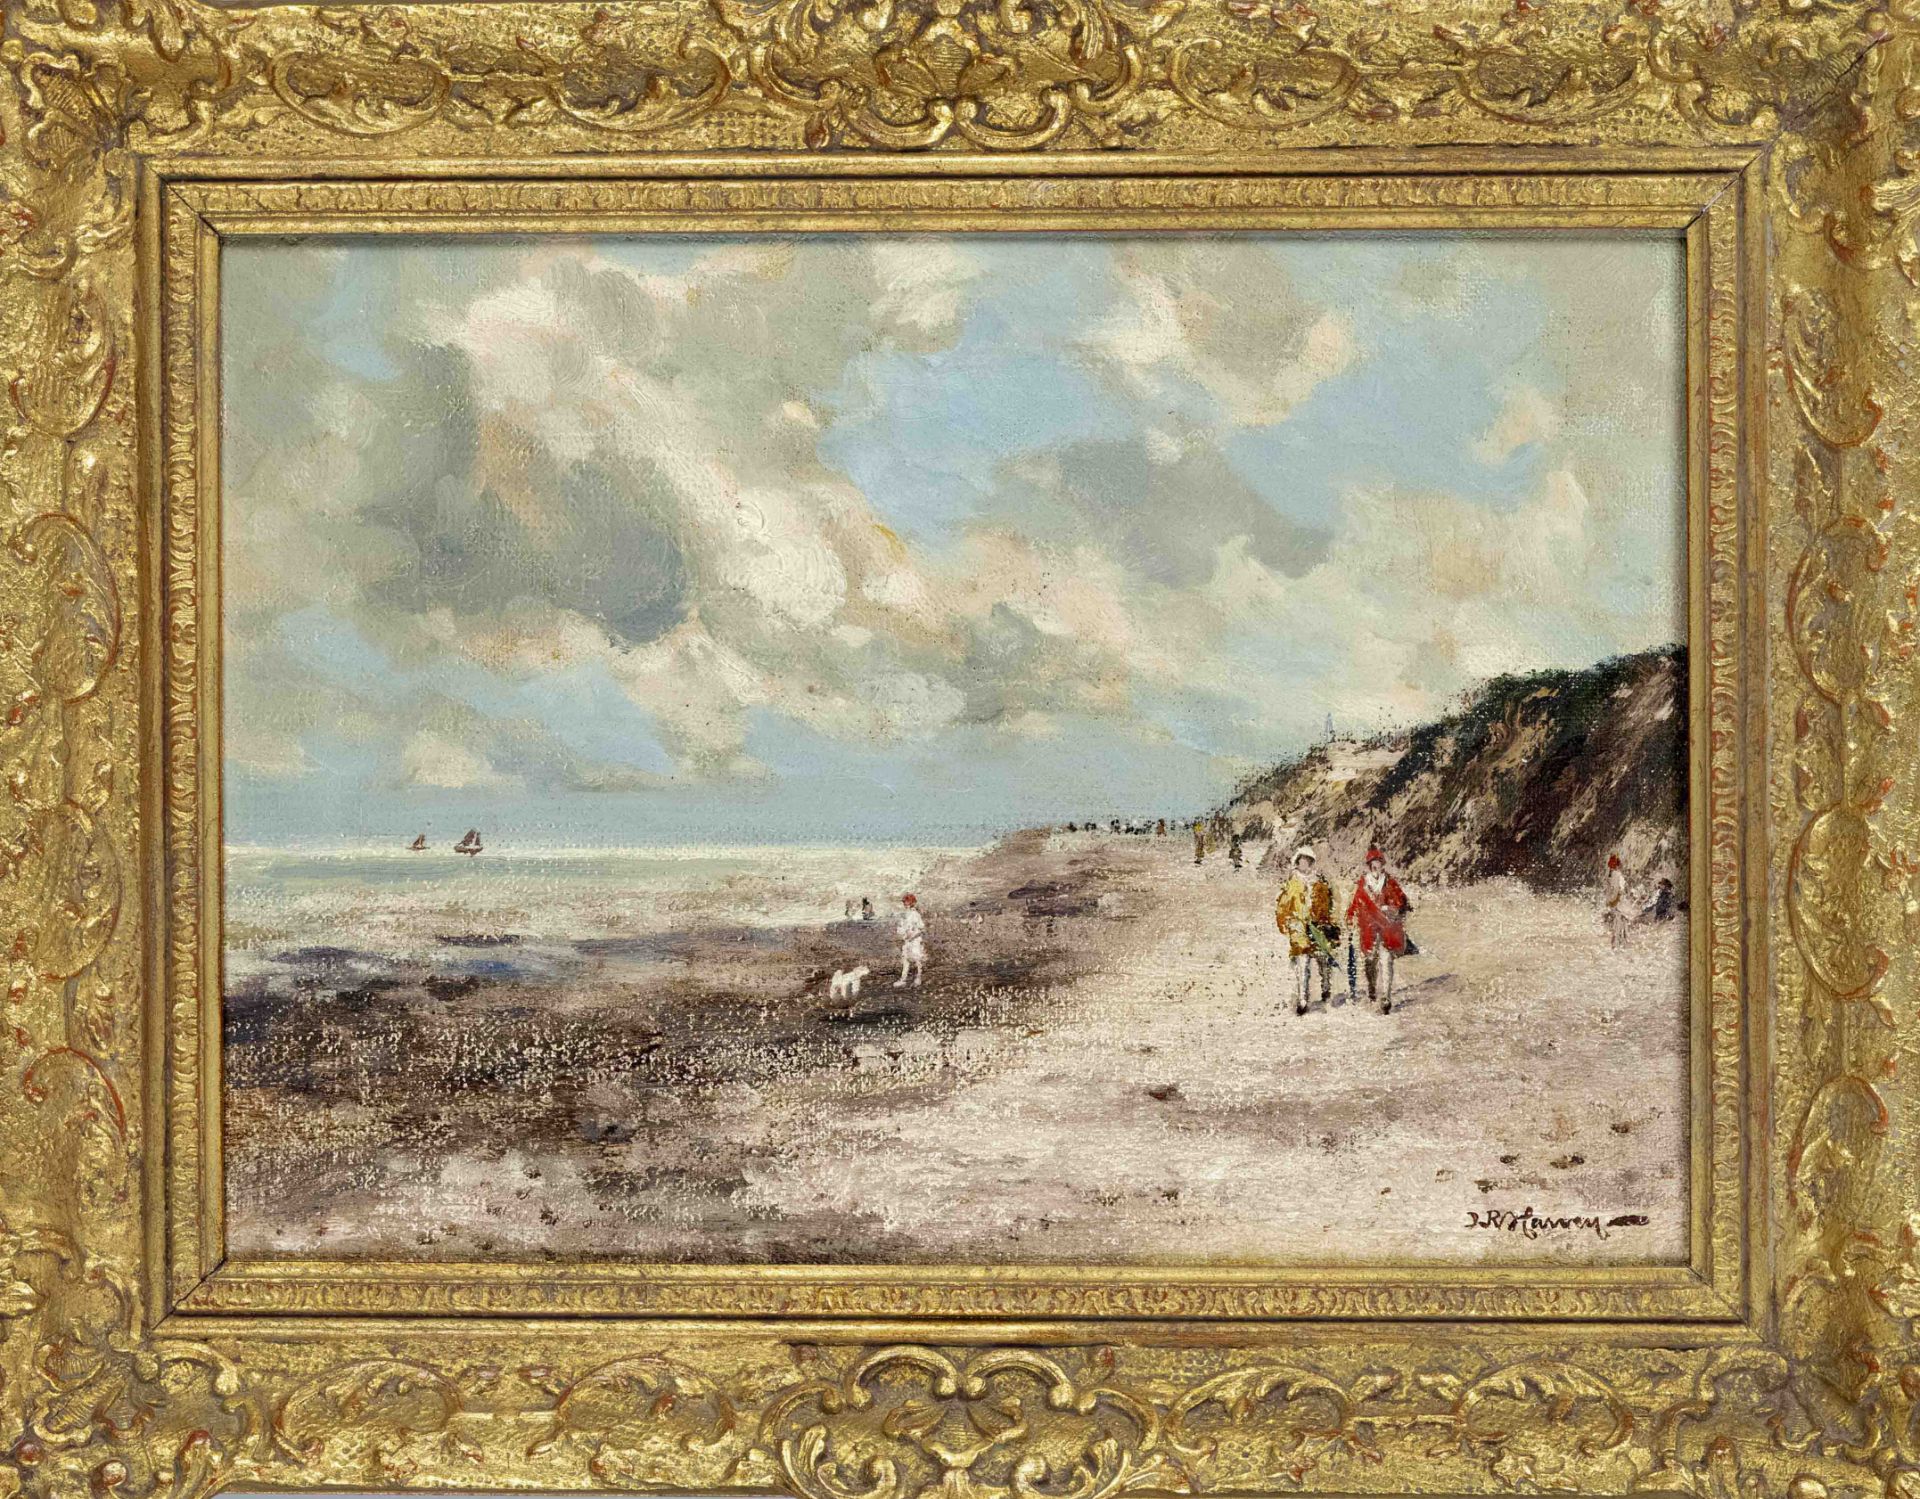 John Rathbone Harvey (1866-1933), English landscape painter, two small paintings: Flaneure am Strand